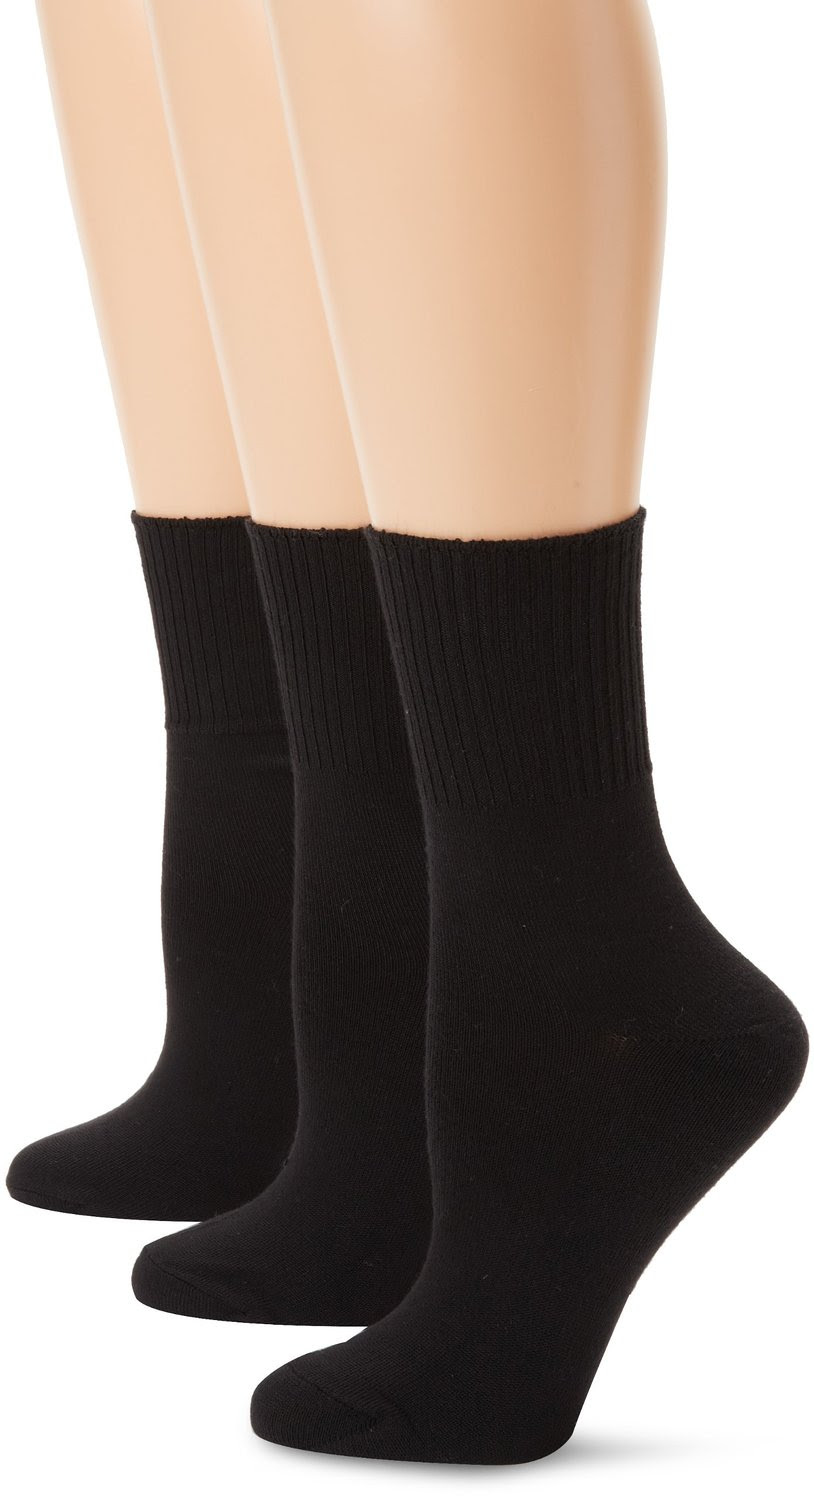 Hanes womens comfortsoftВ® ankle socks